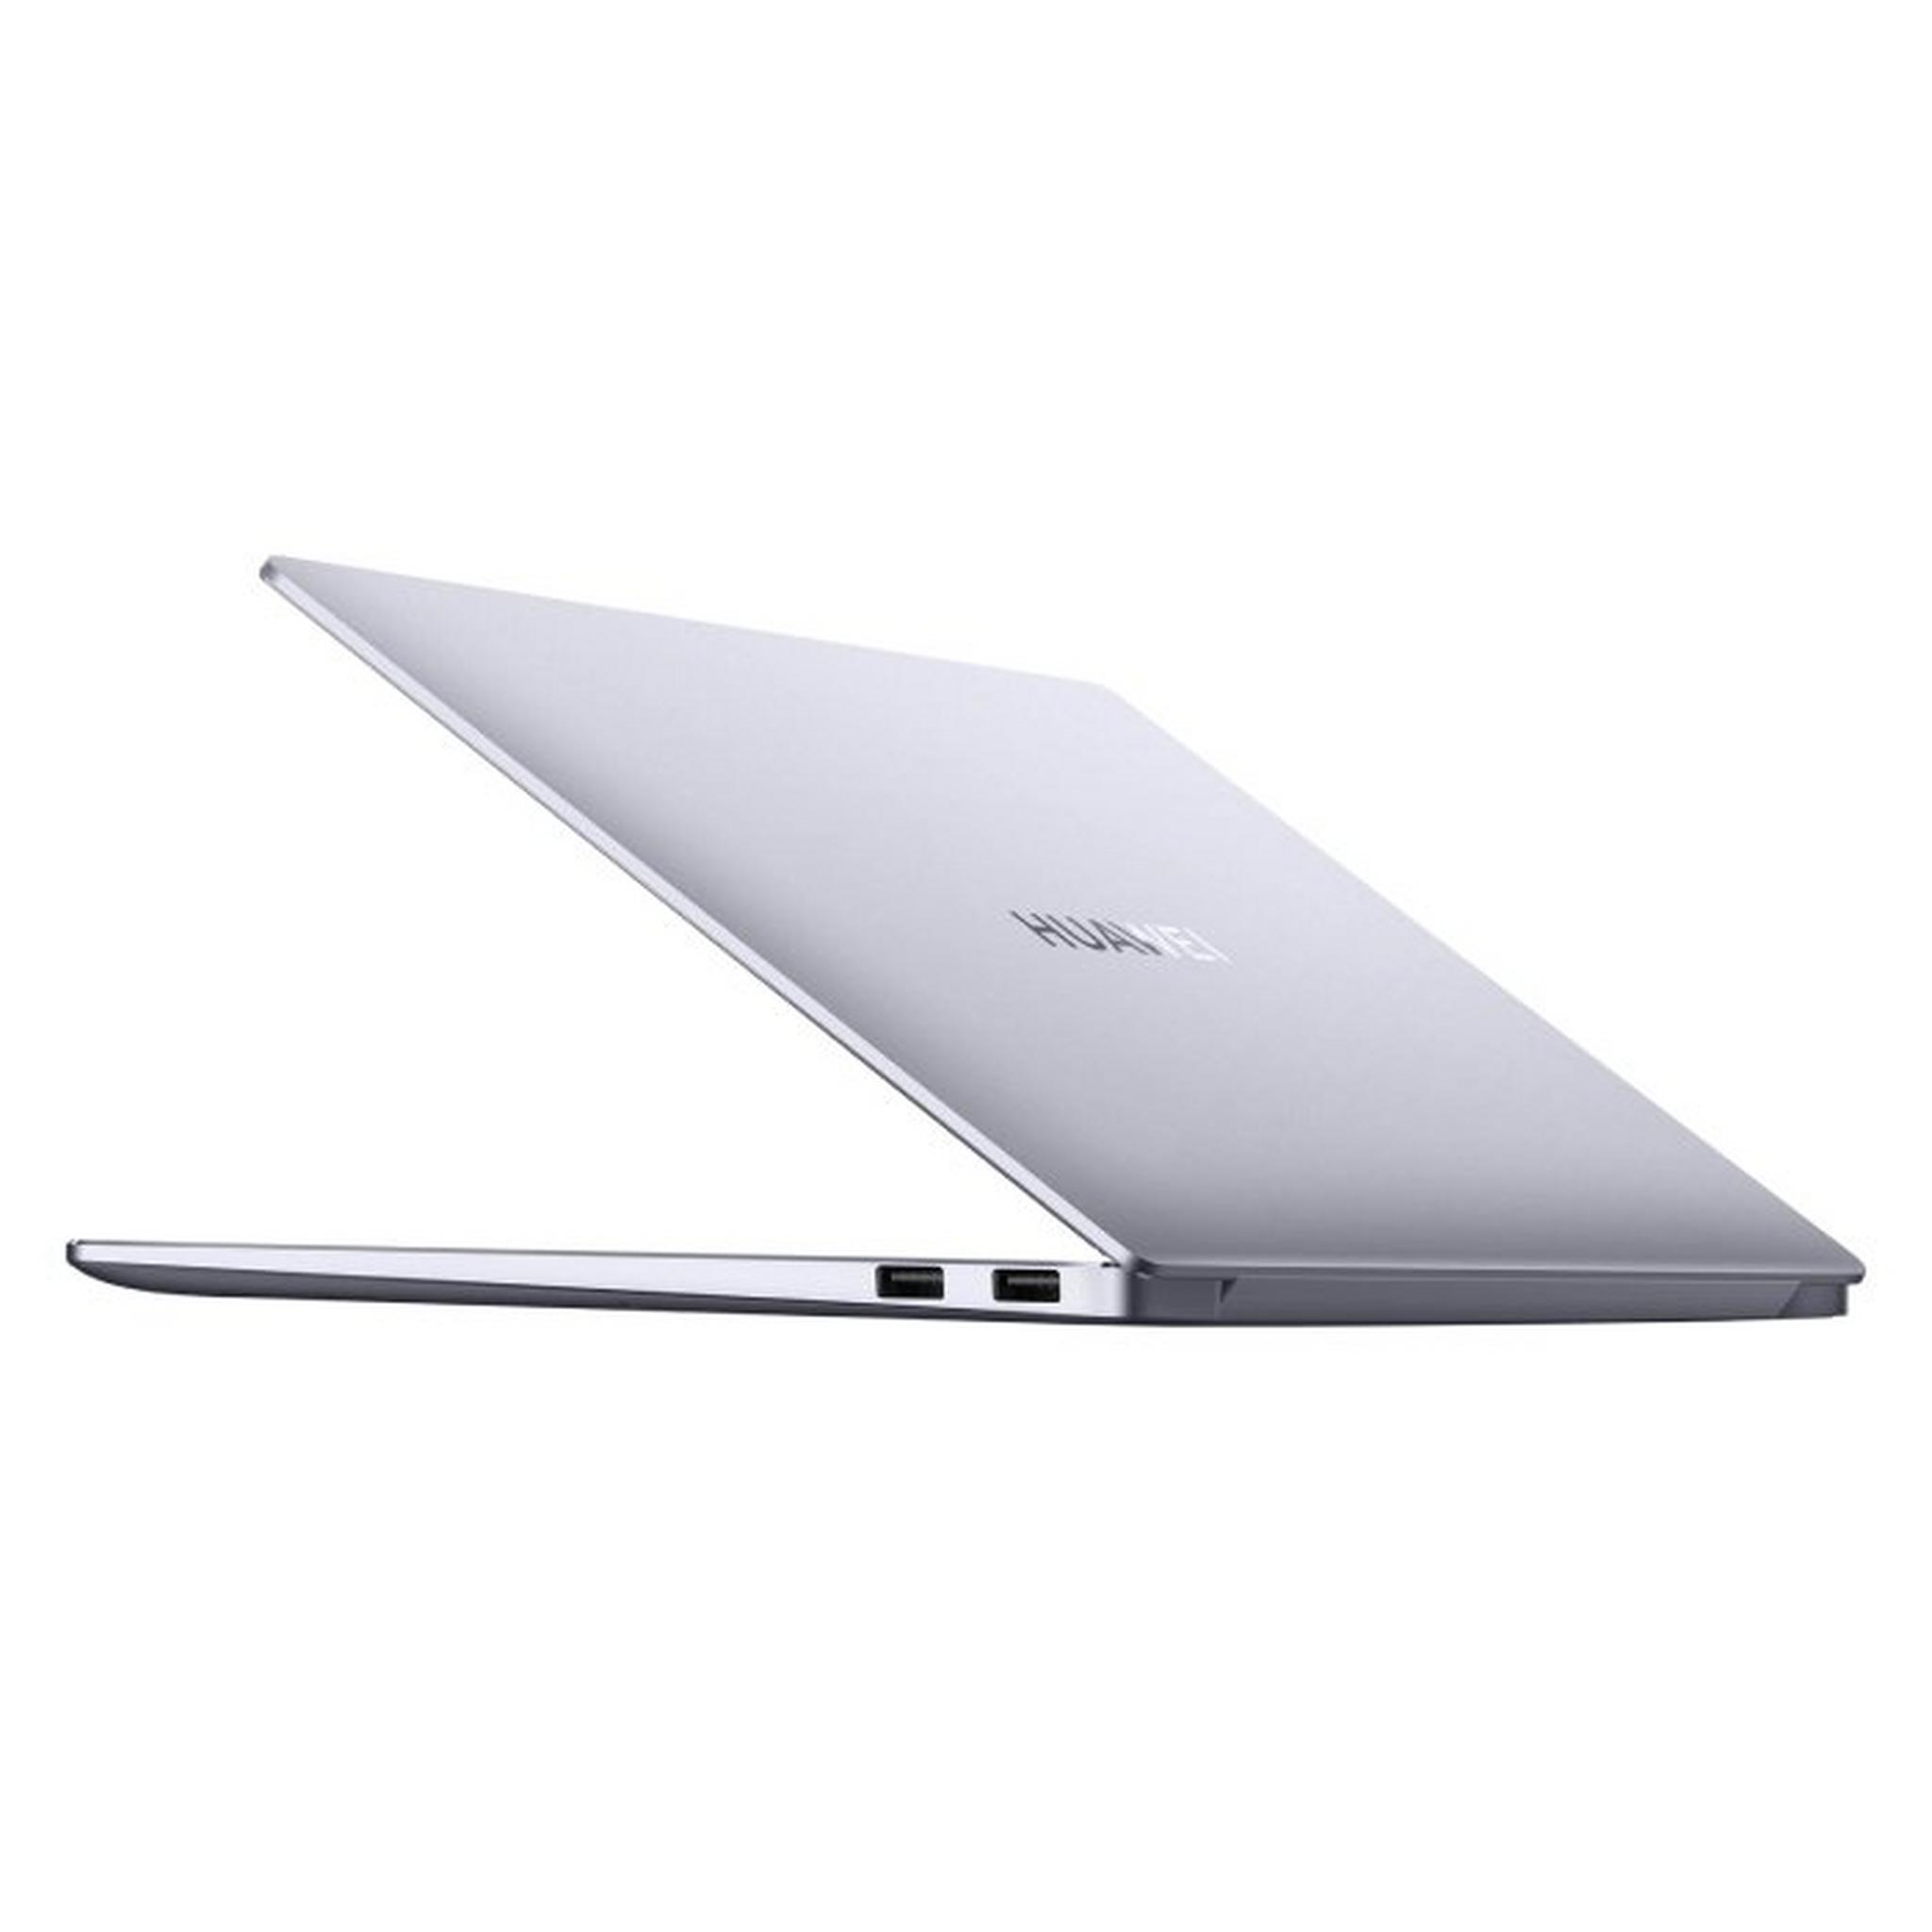 Huawei Matebook 14 Intel Core i5 11th Gen, RAM 8GB, 512 SSD, 14-inch Laptop - Grey